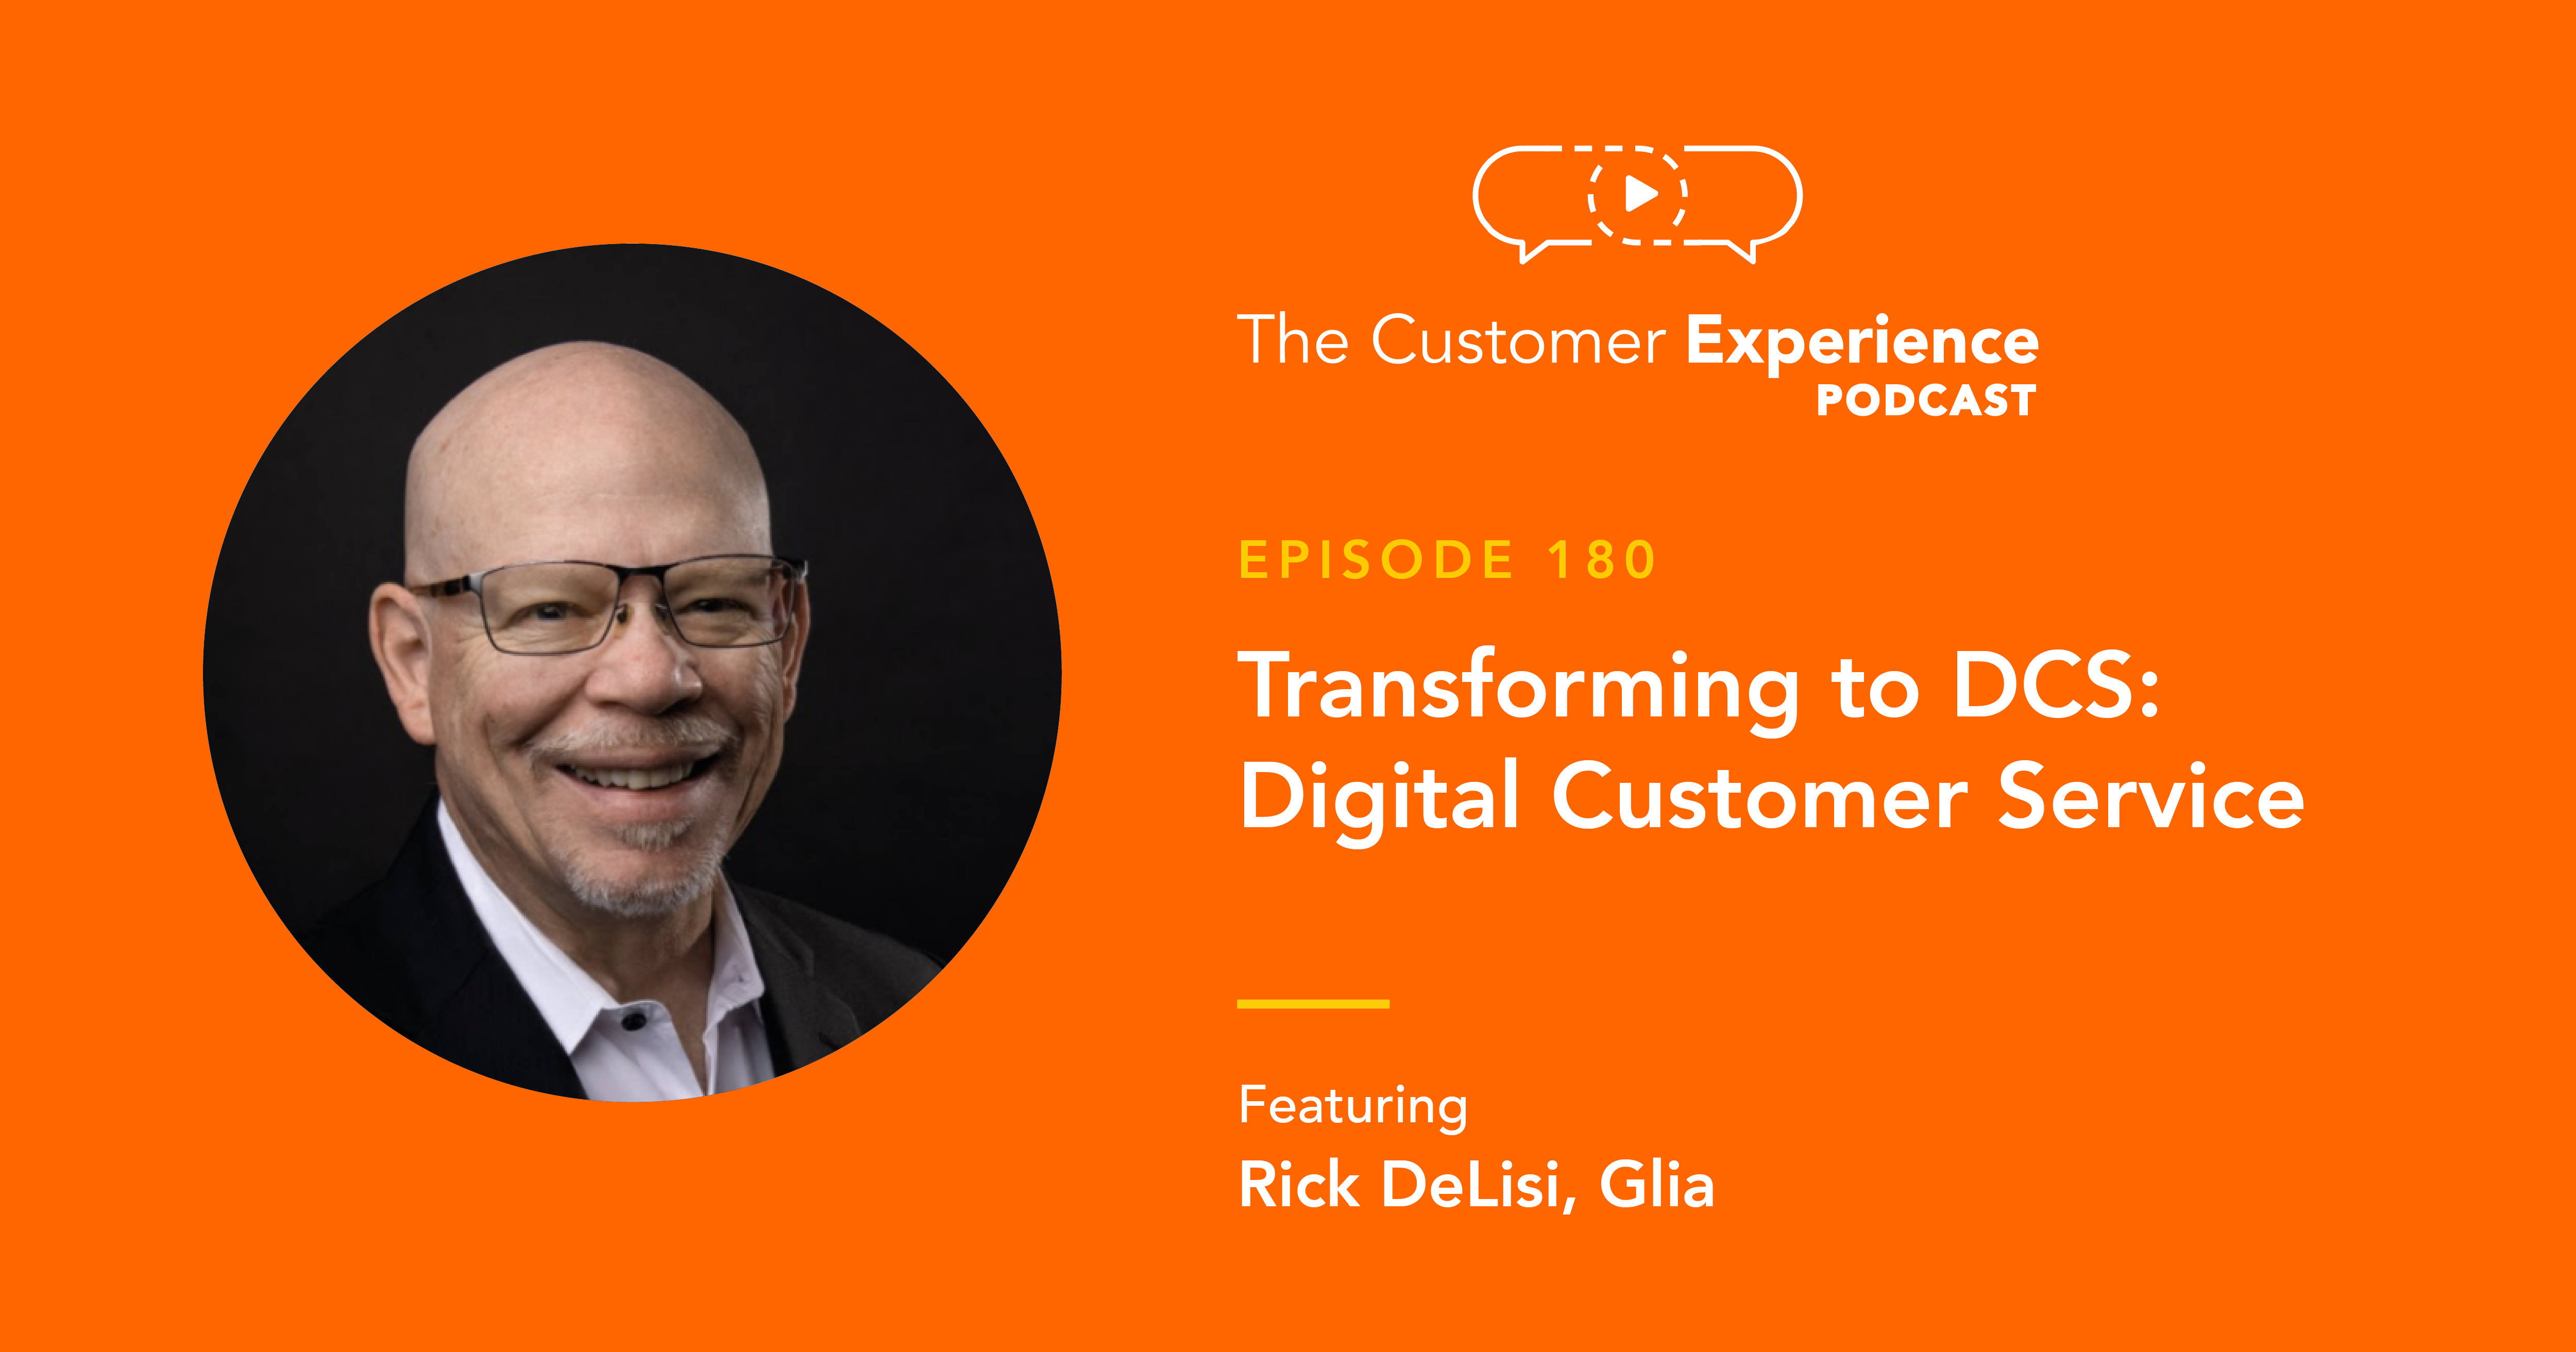 Rick DeLisi, DCS, Digital Customer Service, Glia, Customer Experience, customer service, CX, customer support, customer communication, service and support, digital transformation